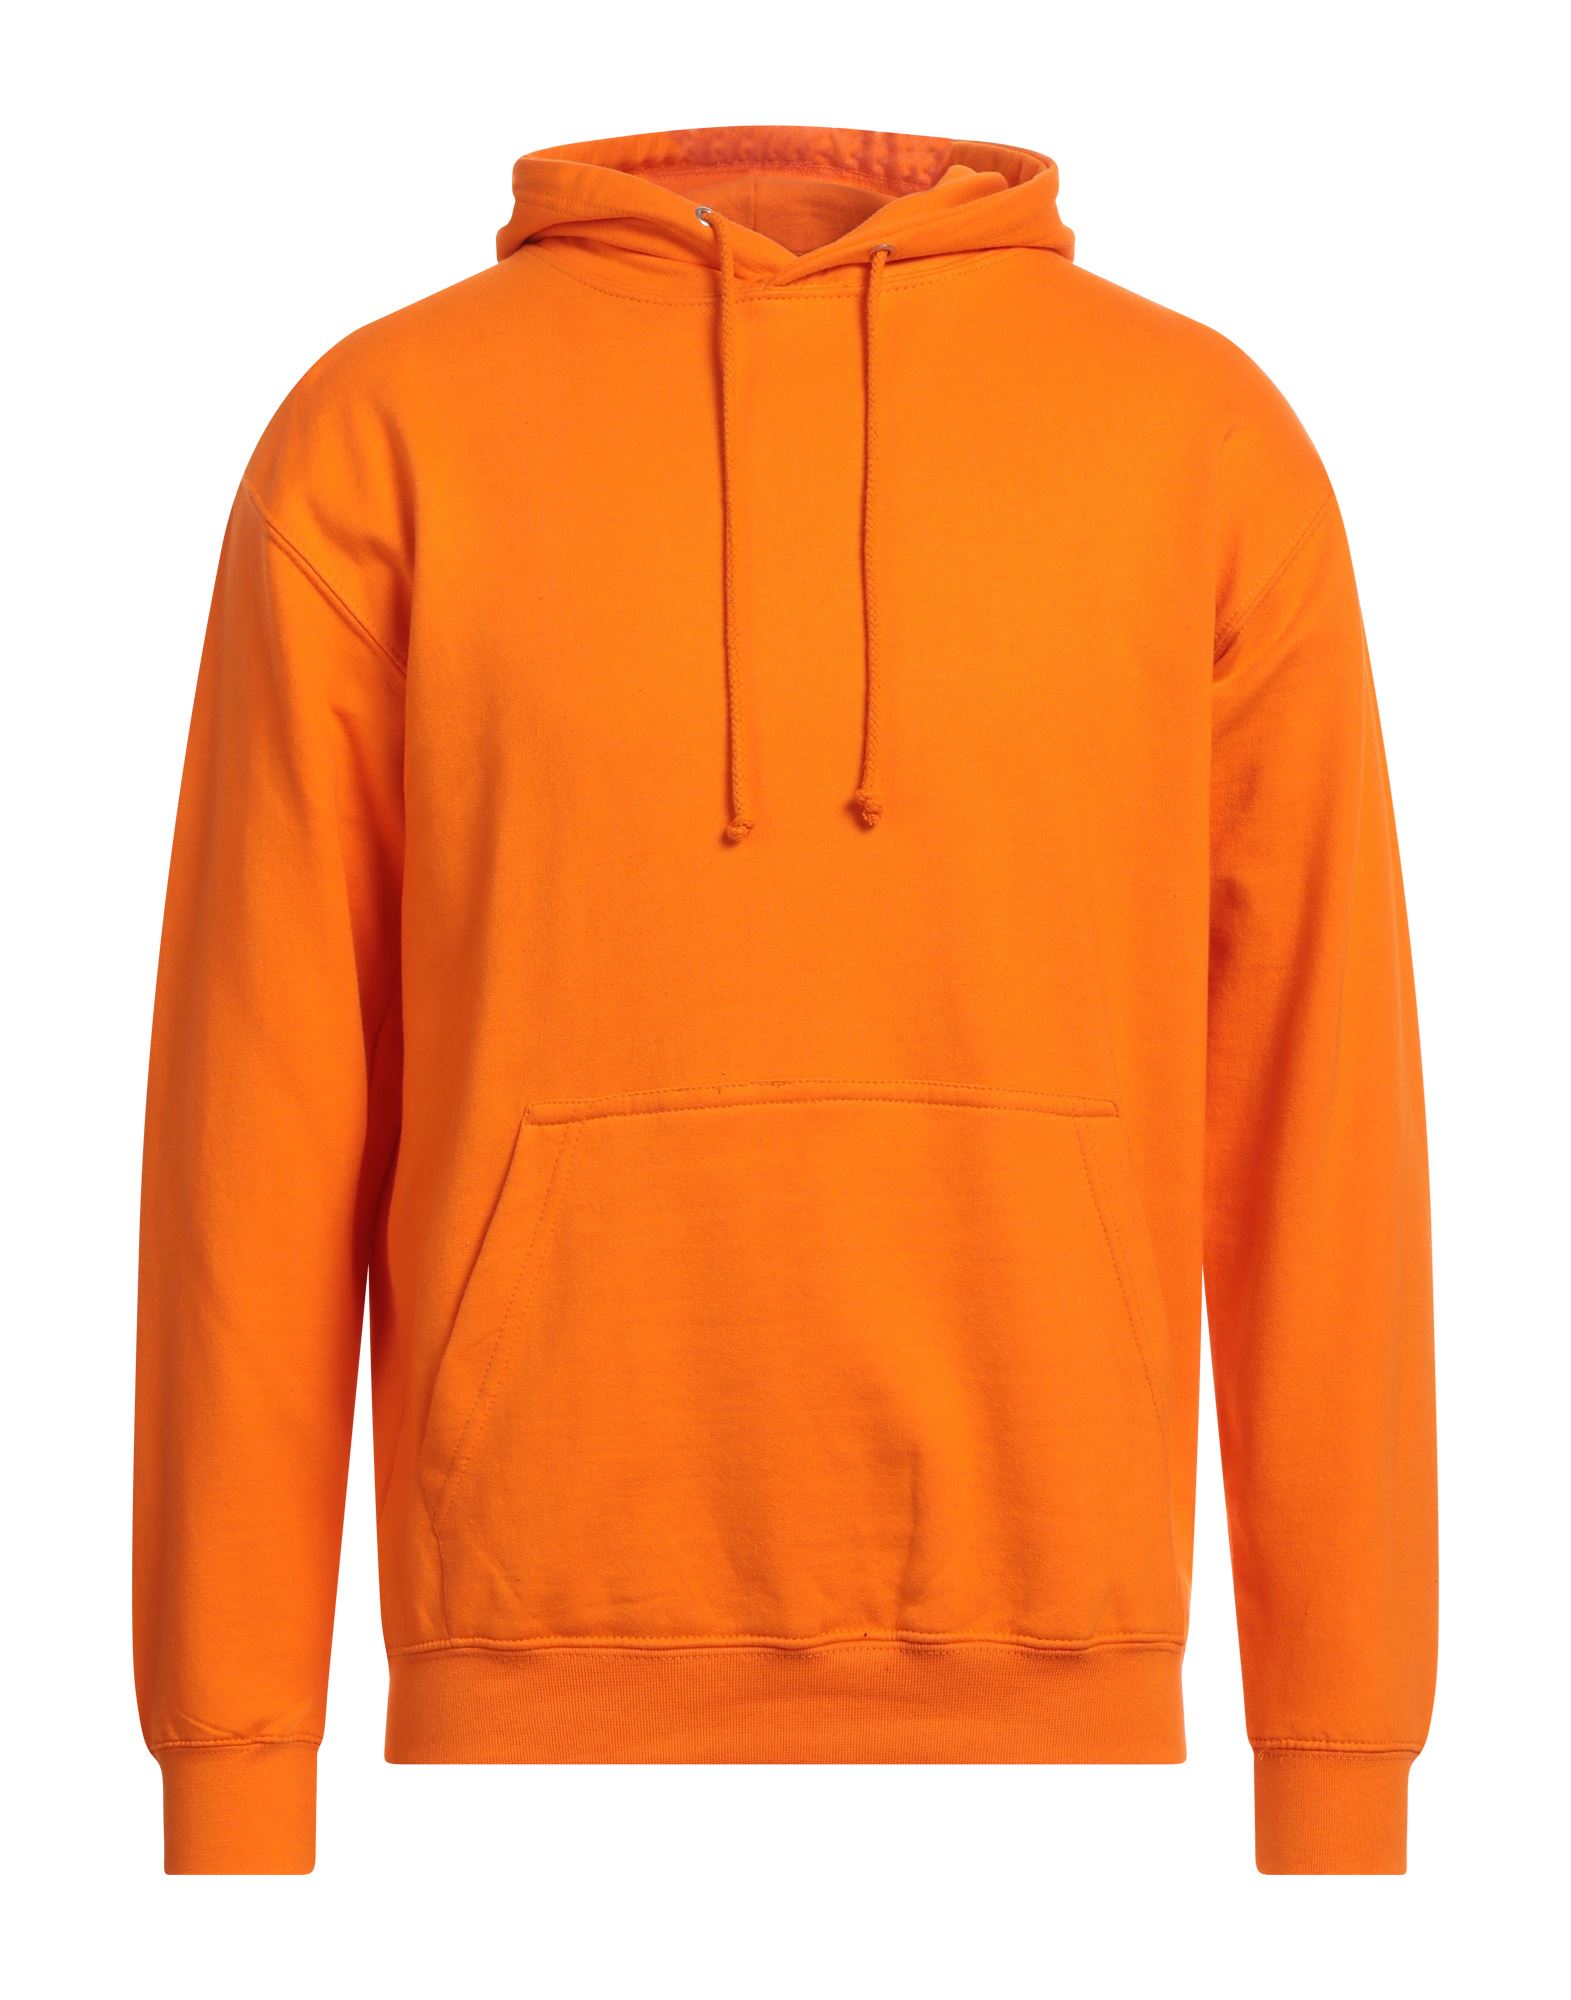 BARK Sweatshirt Herren Orange von BARK